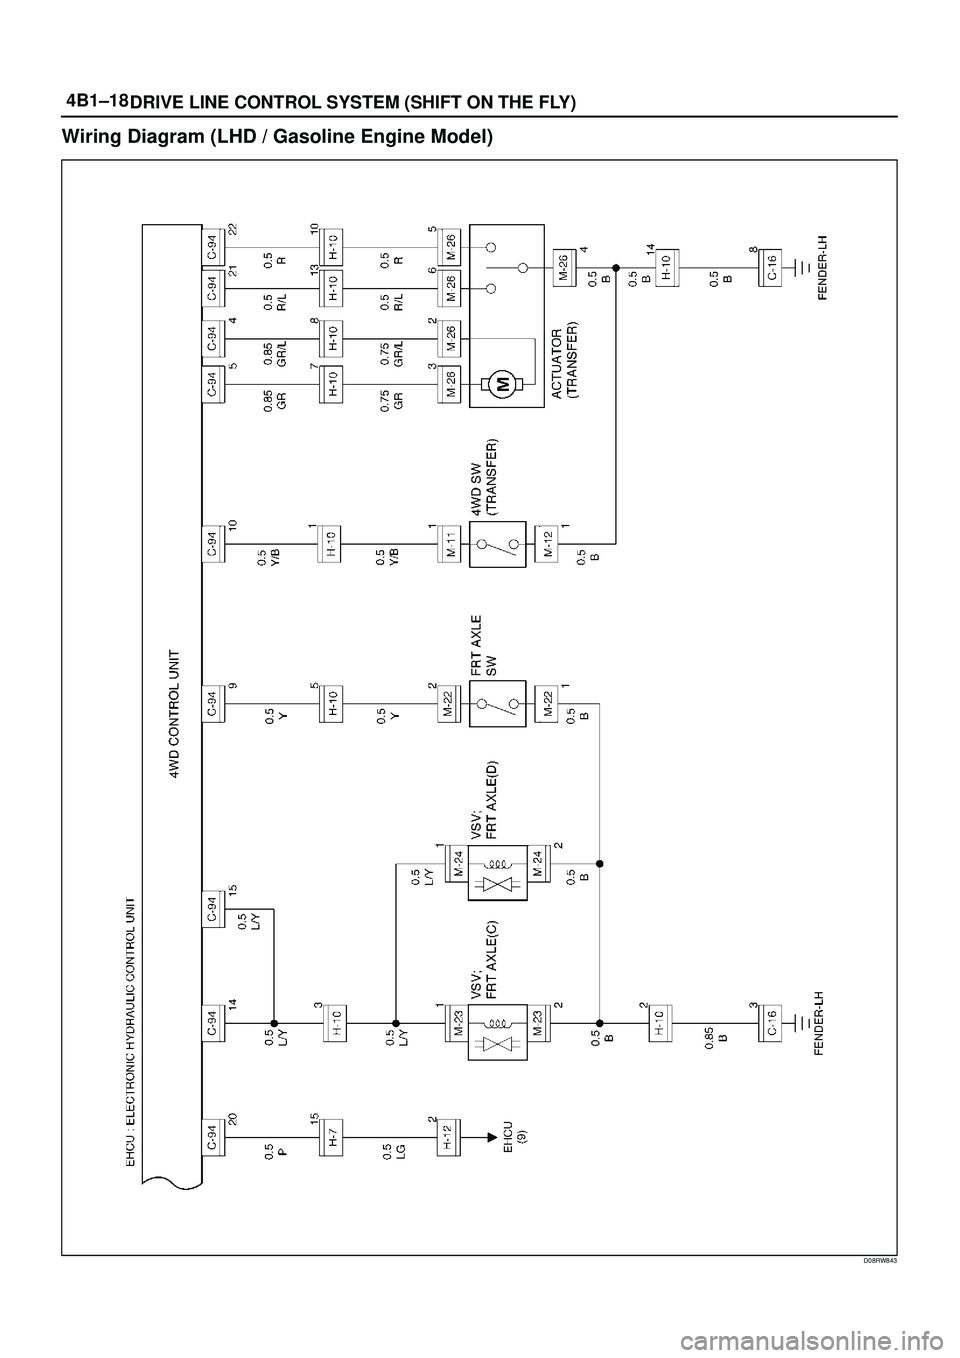 ISUZU TROOPER 1998  Service Repair Manual 4B1±18
DRIVE LINE CONTROL SYSTEM (SHIFT ON THE FLY)
Wiring Diagram (LHD / Gasoline Engine Model)
D08RW843 